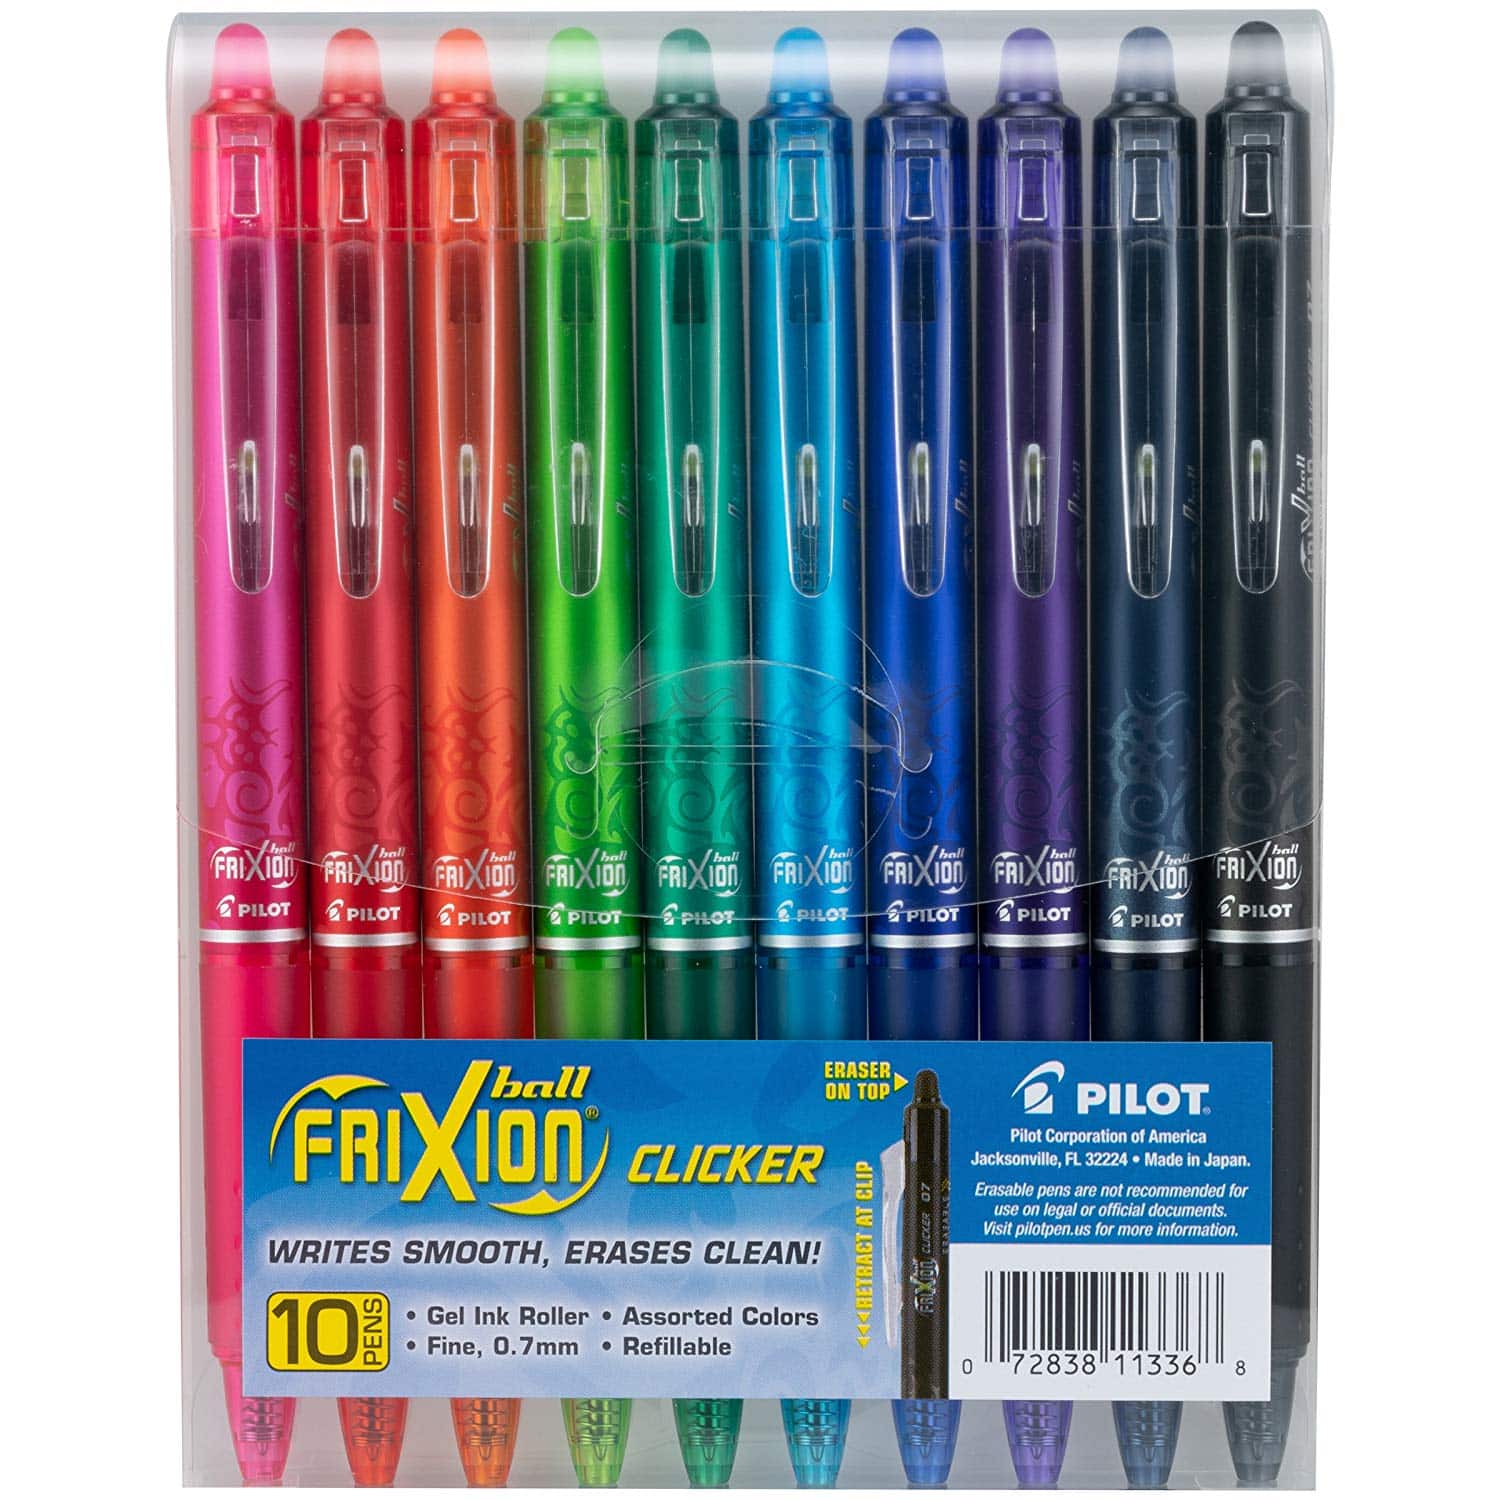 LIGHTNING DEAL ALERT! PILOT Frixion Clicker Erasable Gel Pens